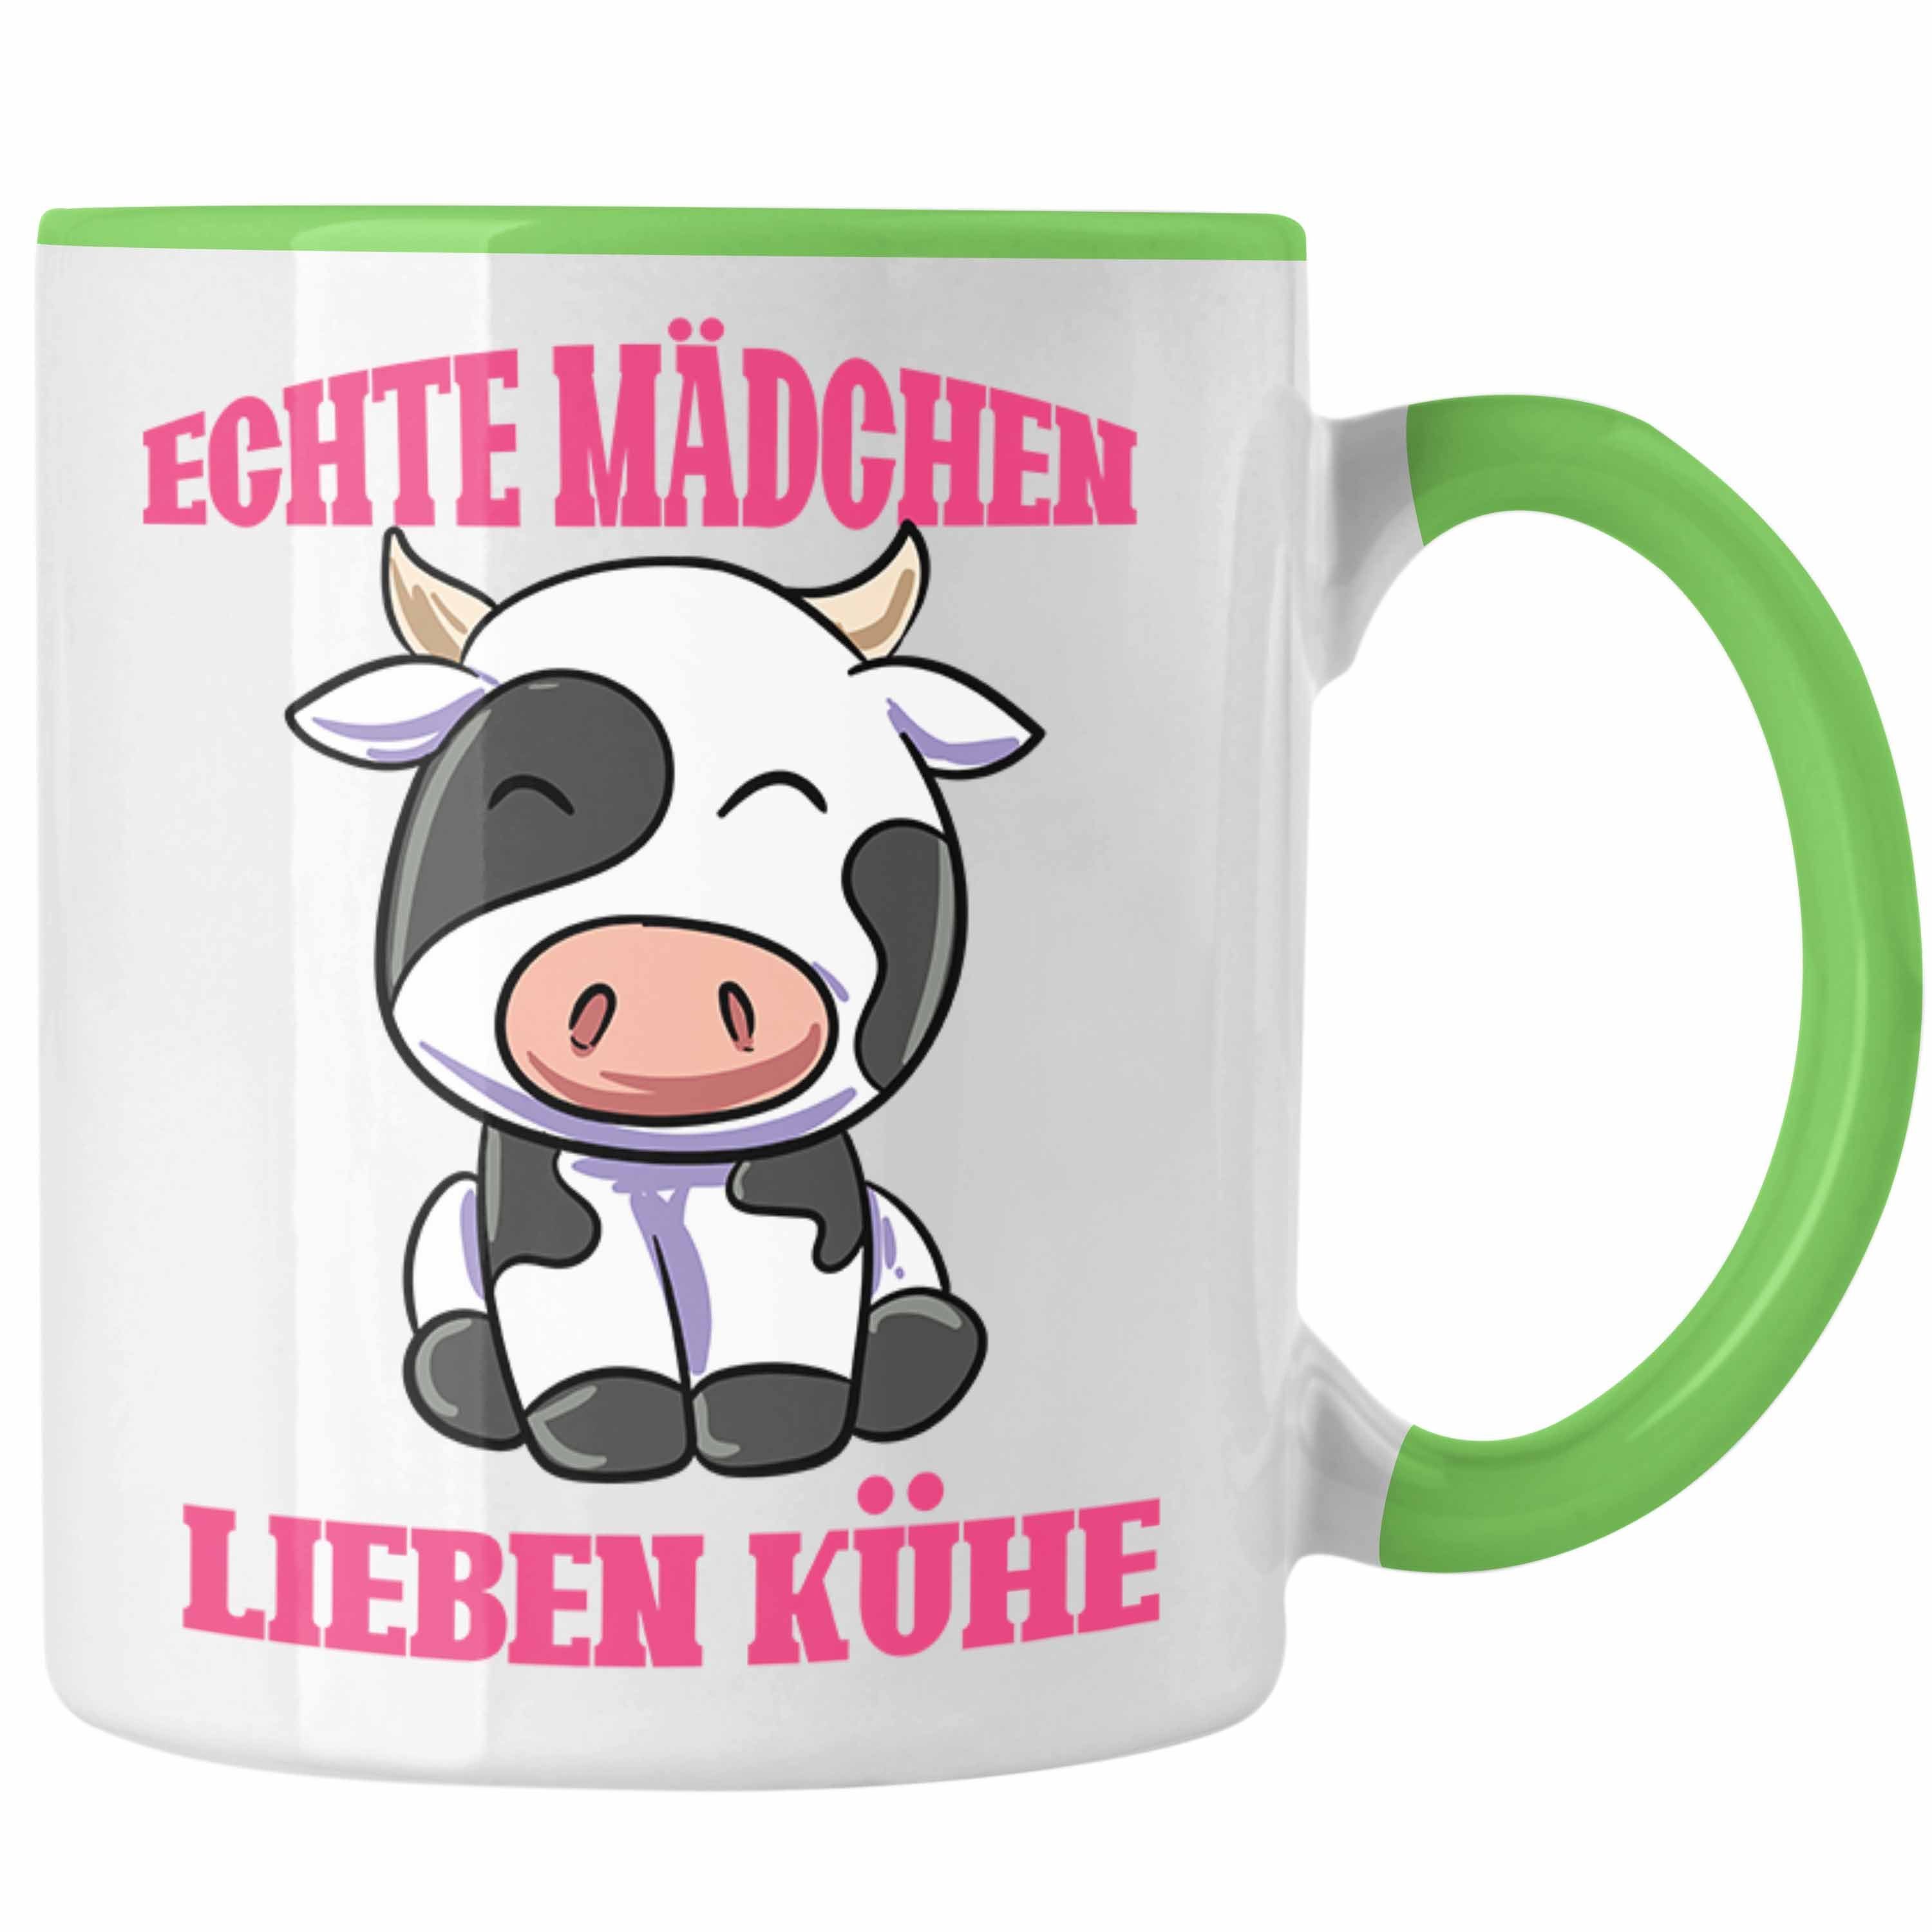 Trendation Mädchen Tasse Grün Kühe Bäuerin Tasse Geschenk Gesch Echte Lieben Landwirtin Kuh